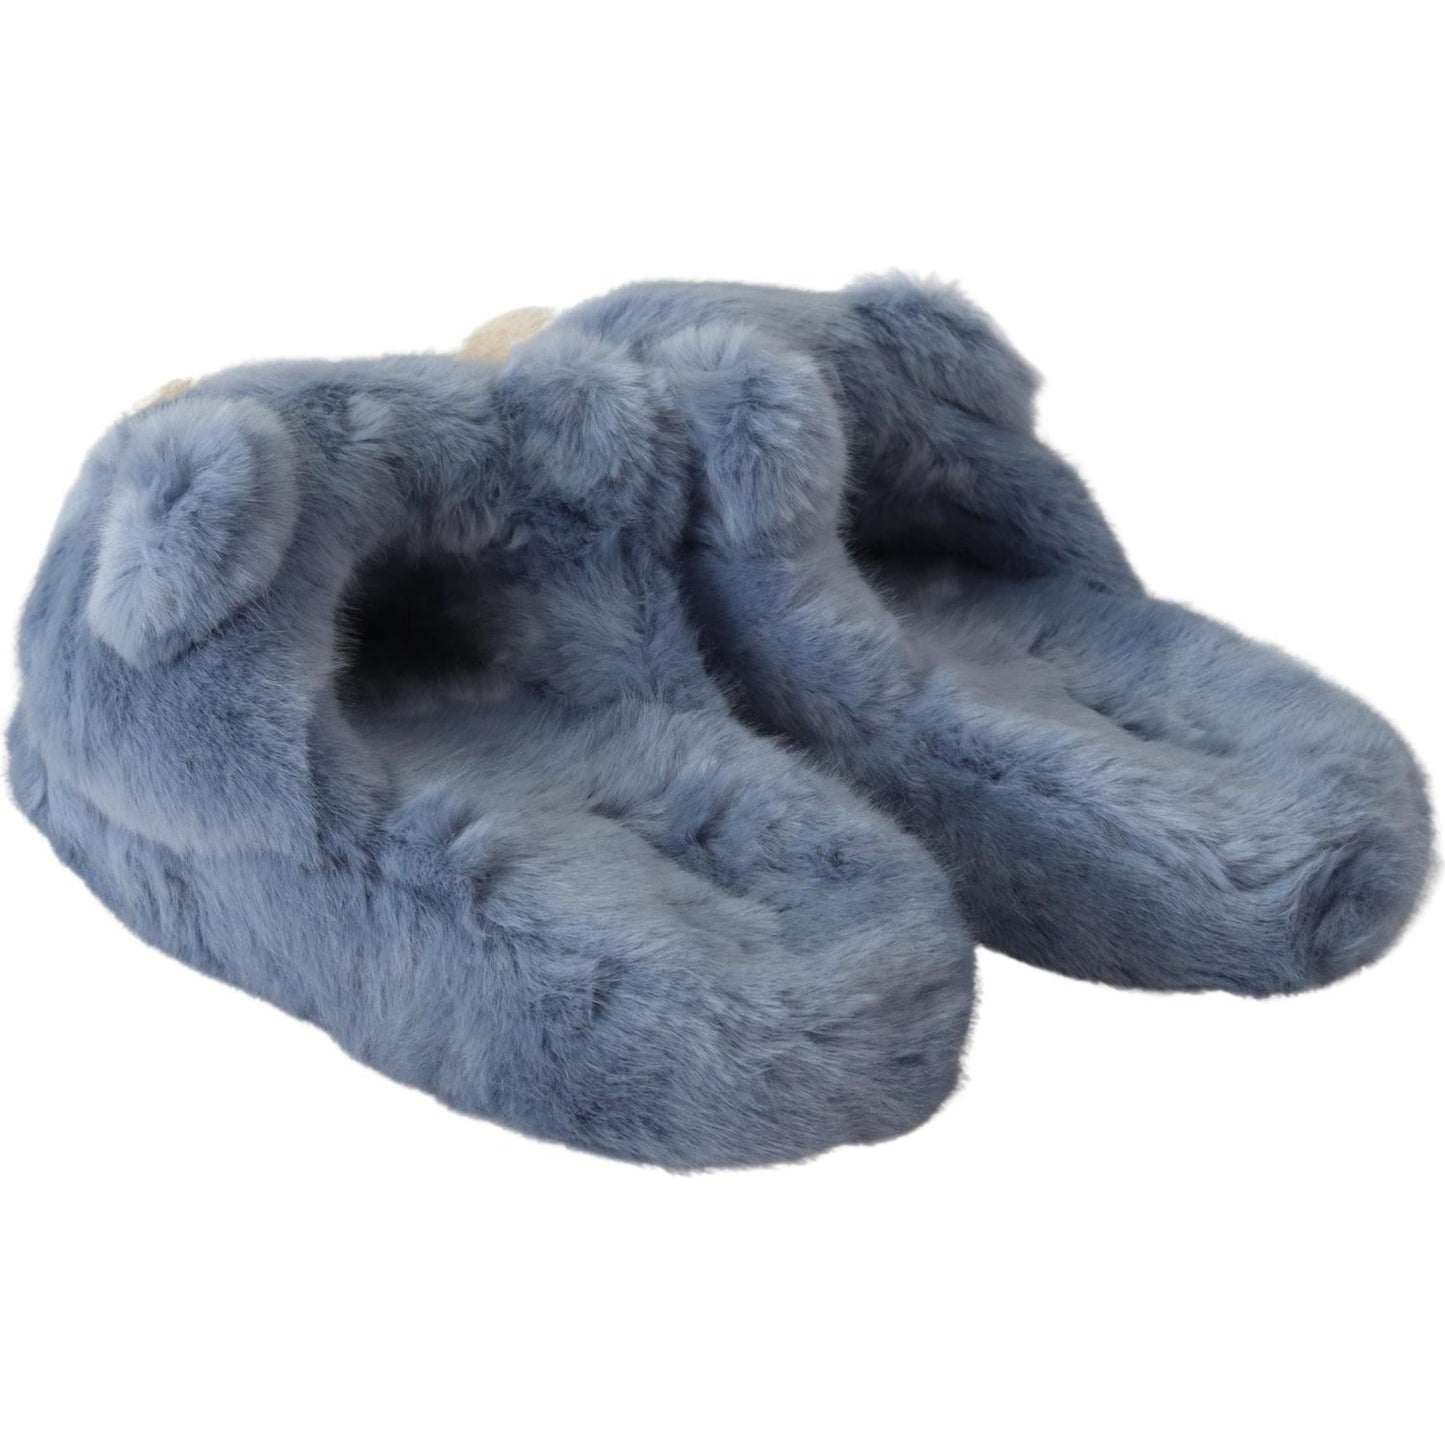 Dolce & GabbanaChic Teddy Bear Blue Loafers ShoesMcRichard Designer Brands£279.00